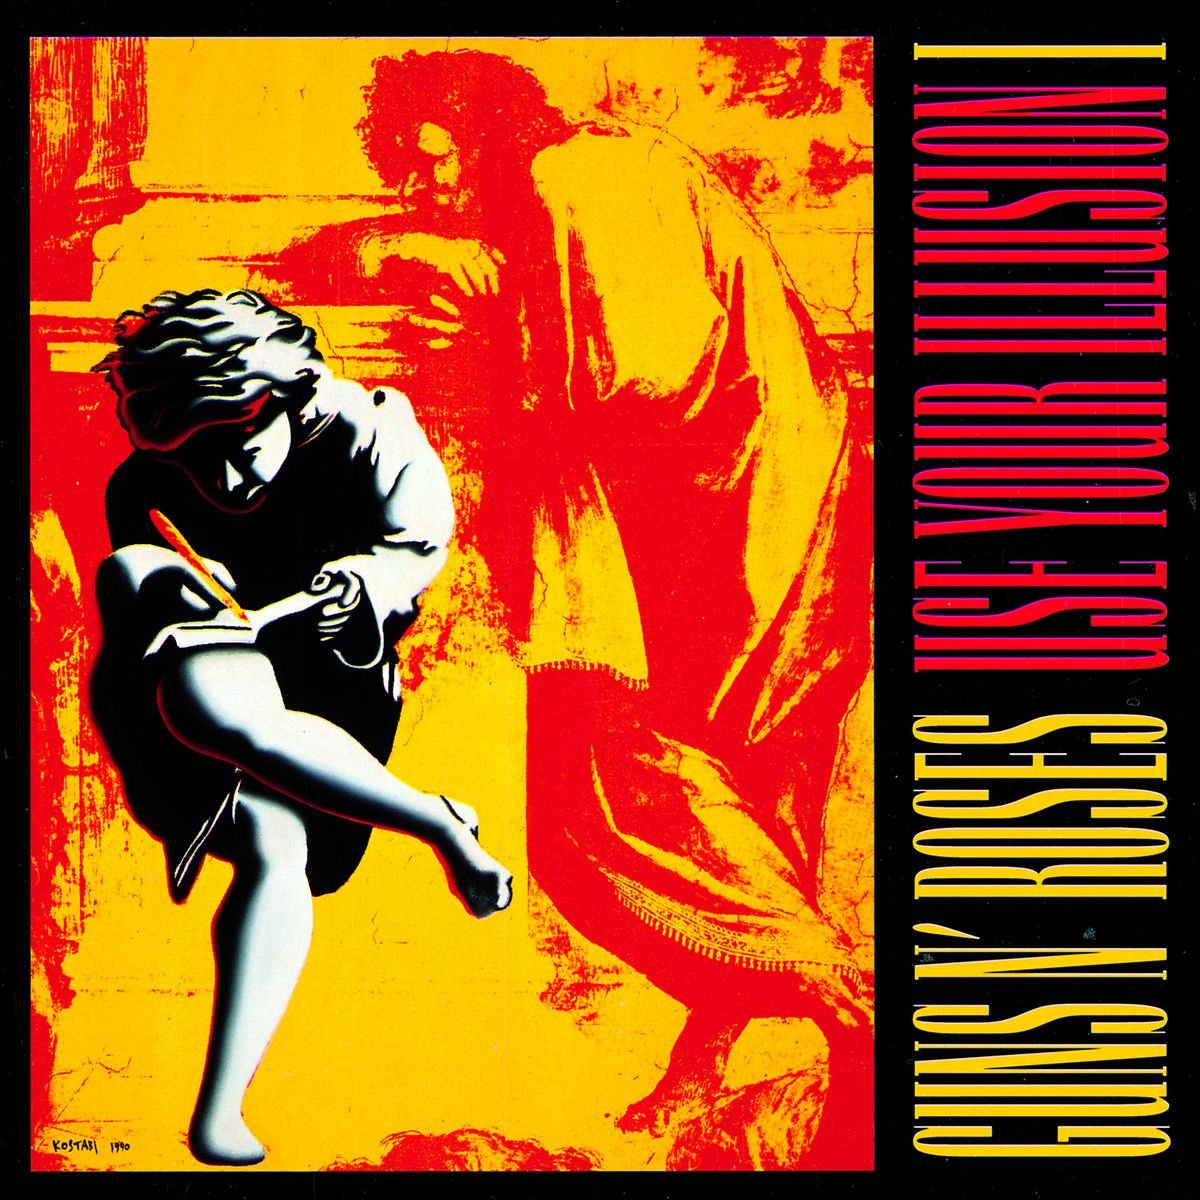 Guns N Roses - Use Your Illusion 1 Vinyl Record Shop, Music Zone, Cork, Ireland